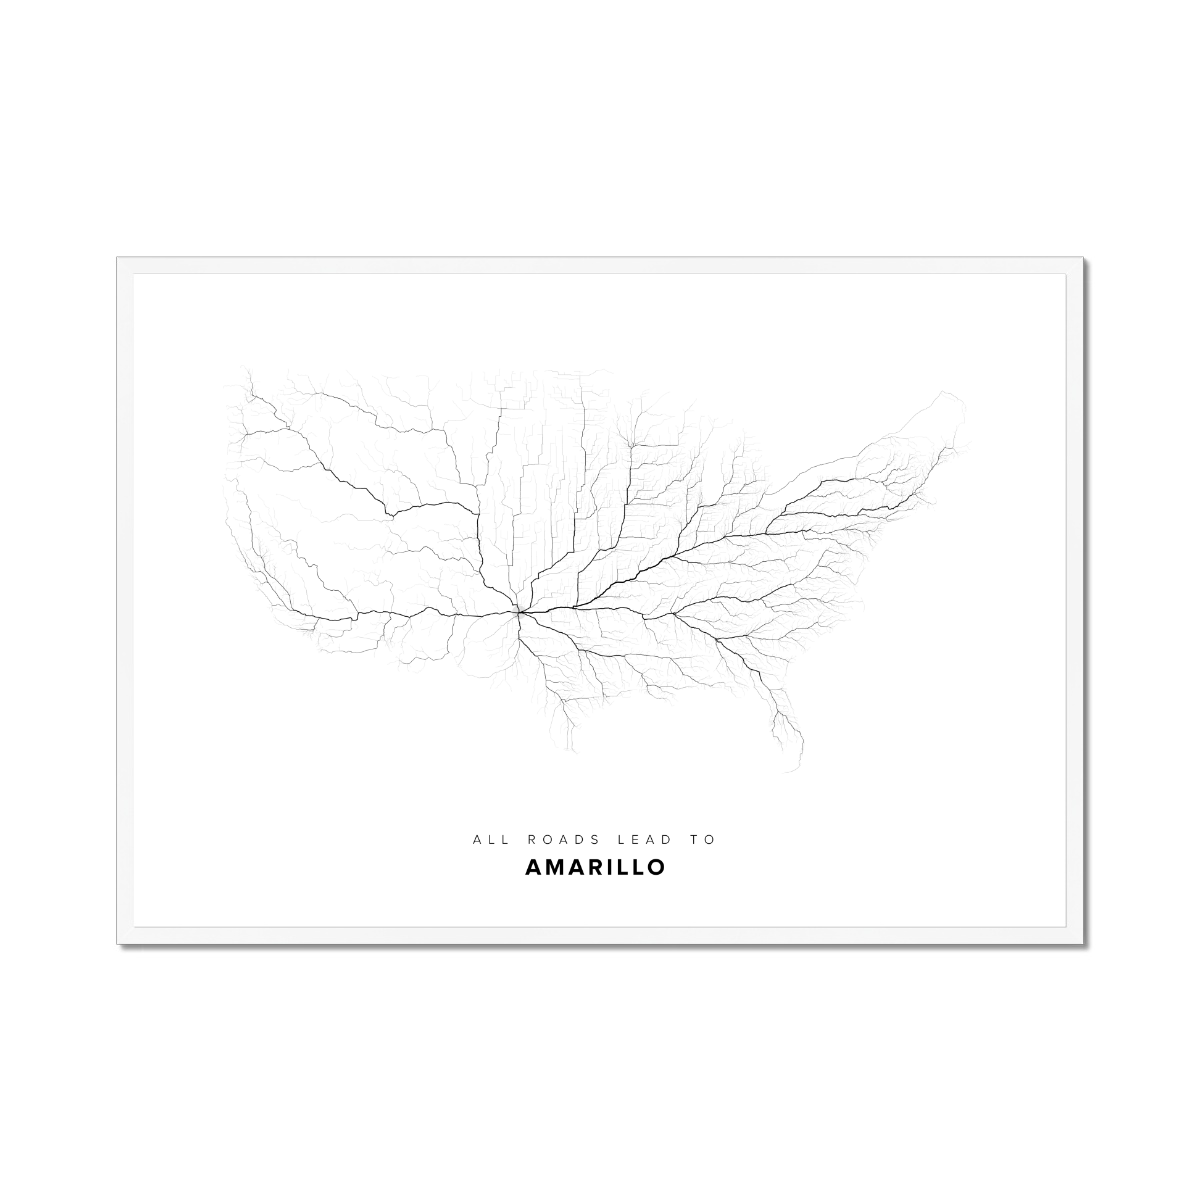 All roads lead to Amarillo (United States of America) Fine Art Map Print